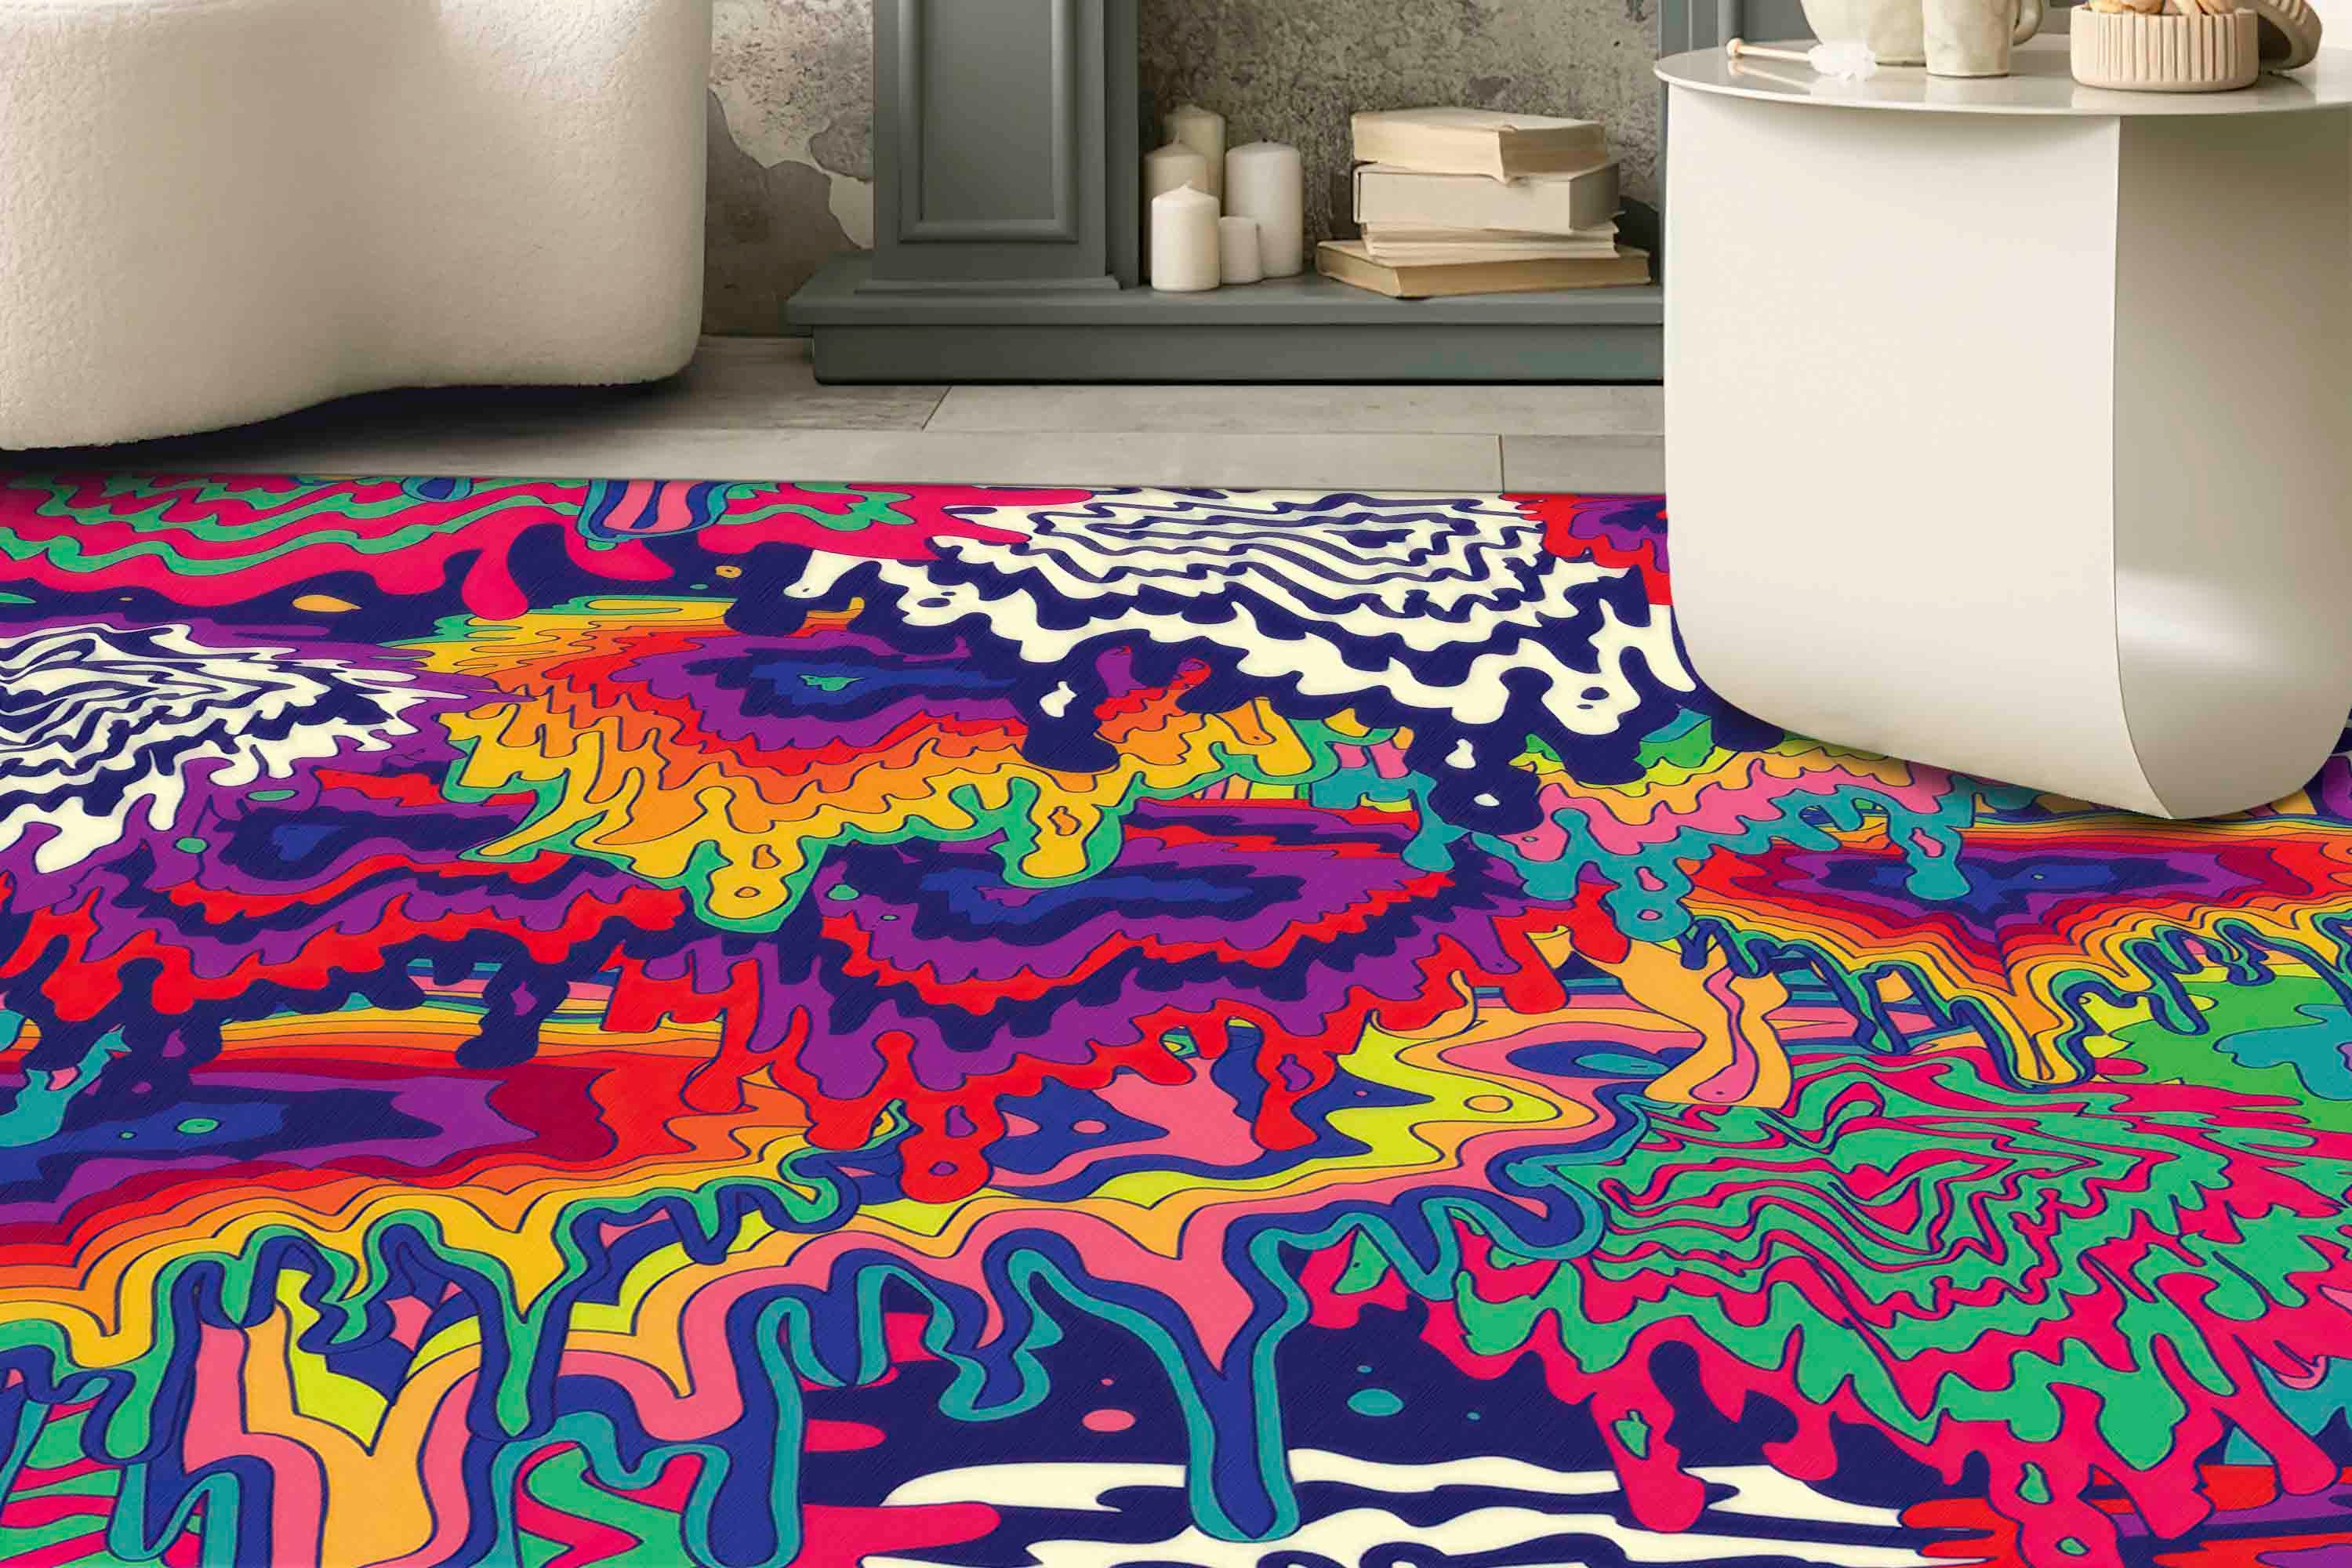  Kitchen Rug Sets,Magic Mushrooms Over Sacred Geometry  Psychedelic Hallucination Vibrant 60S 2 Piece Non-Slip Soft Super Absorbent  Kitchen Floor Mat Doormat Carpet Set : Home & Kitchen